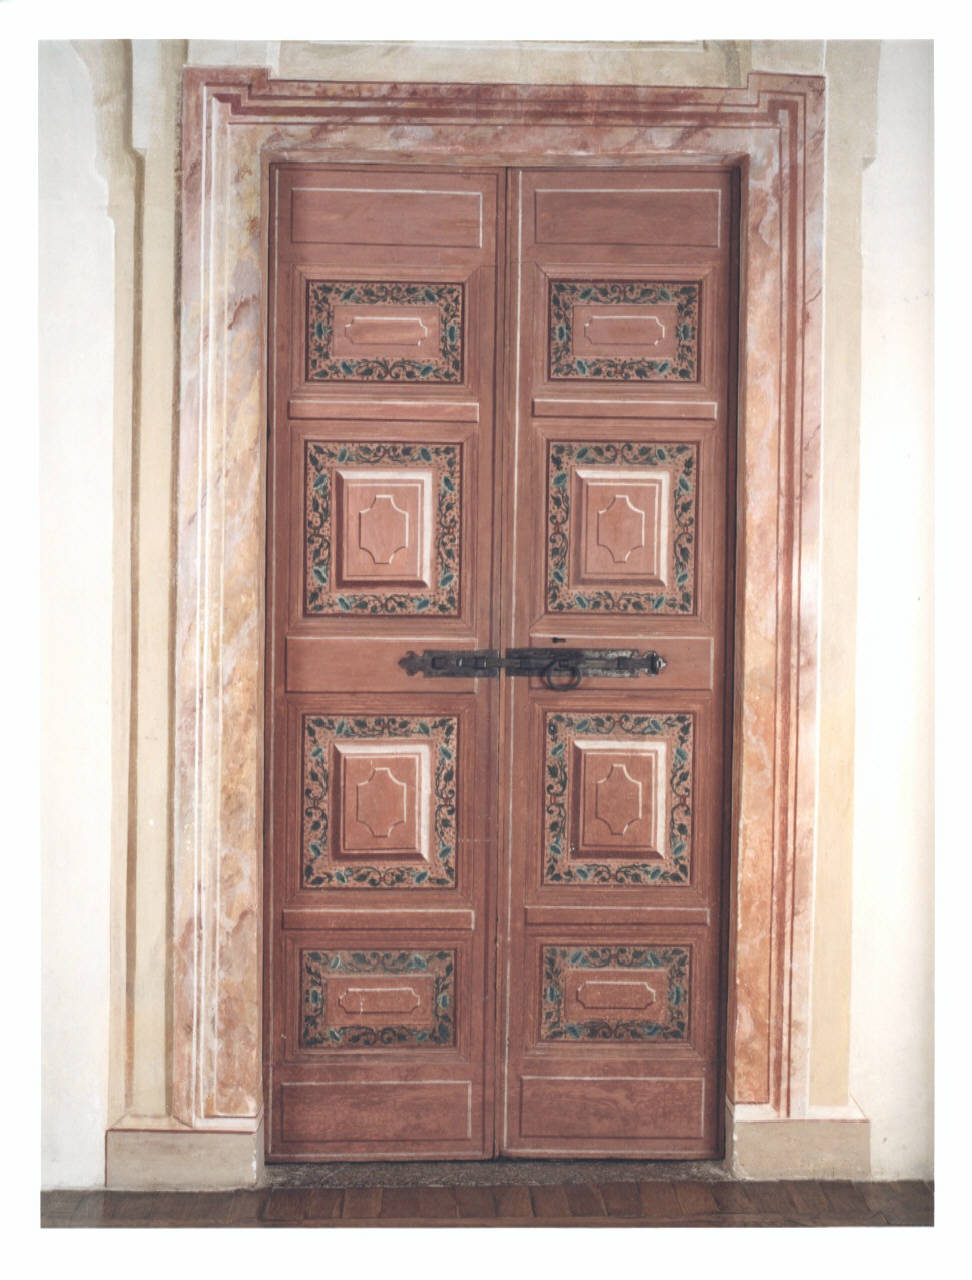 motivi decorativi floreali (porta dipinta) - manifattura lombarda (prima metà sec. XVIII)